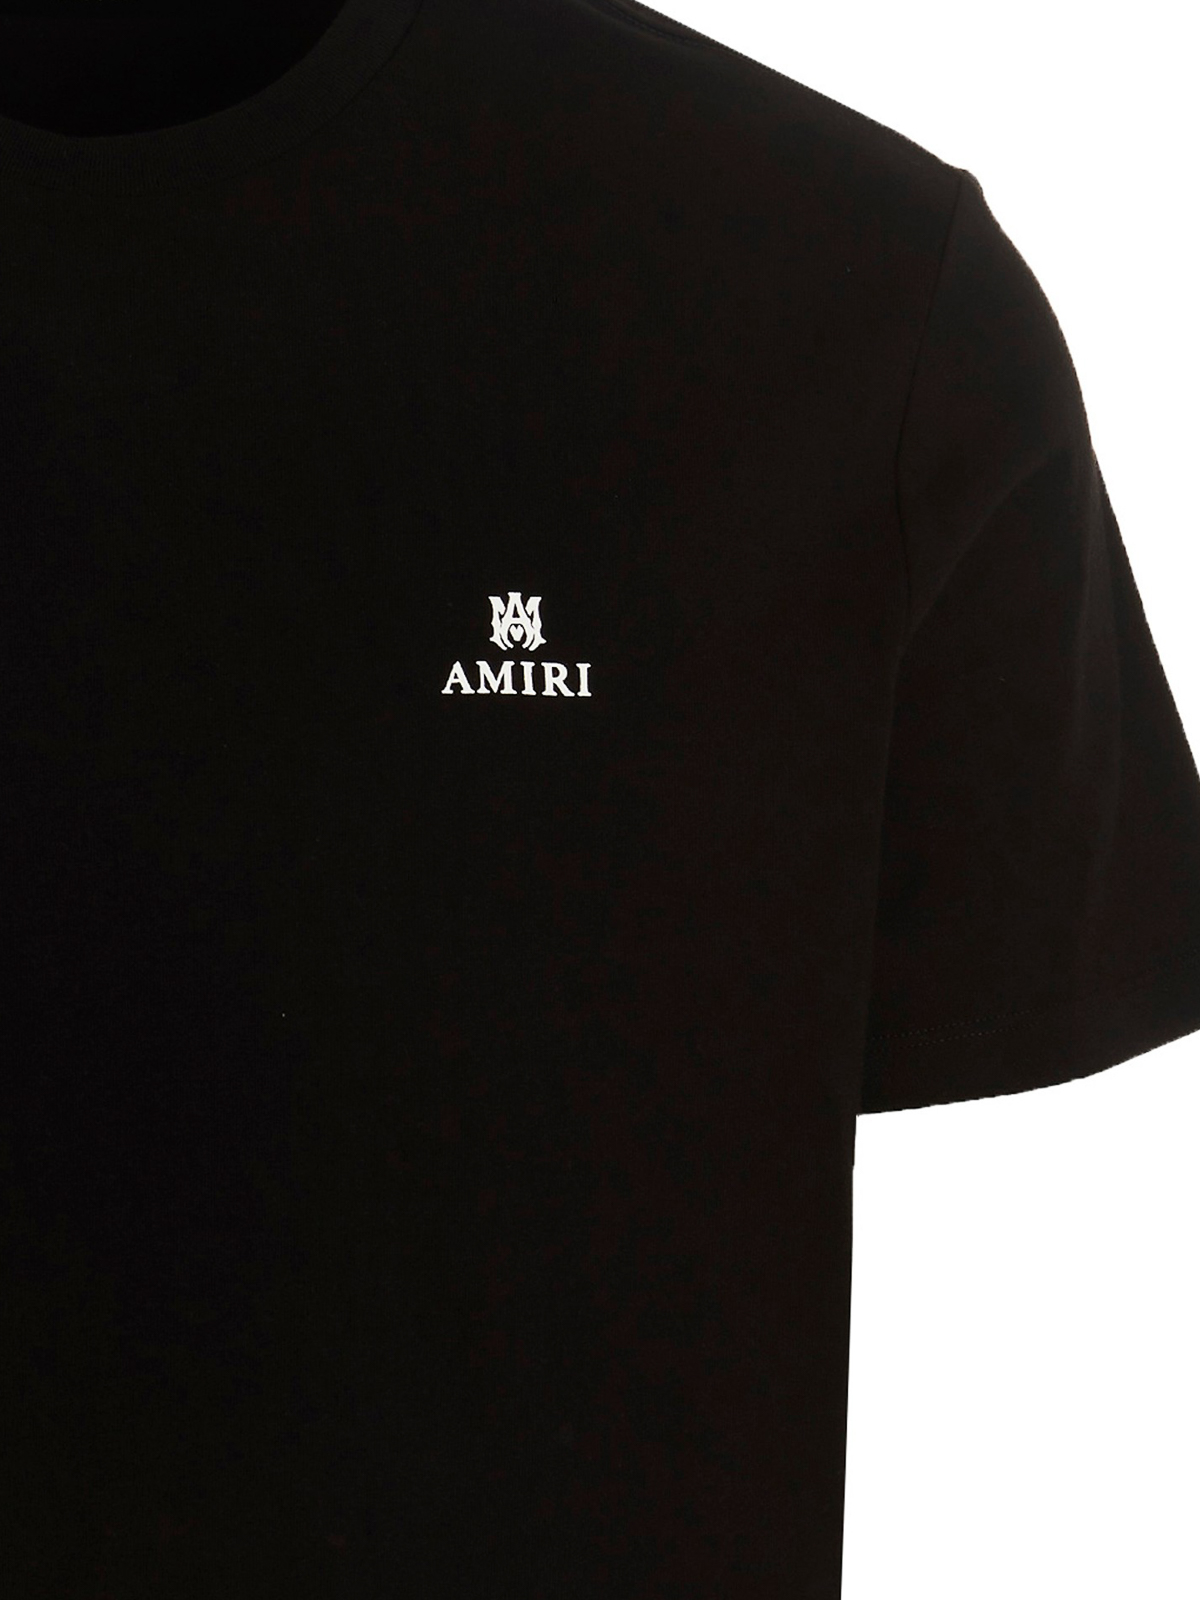 M.A. paisley-print T-shirt, AMIRI